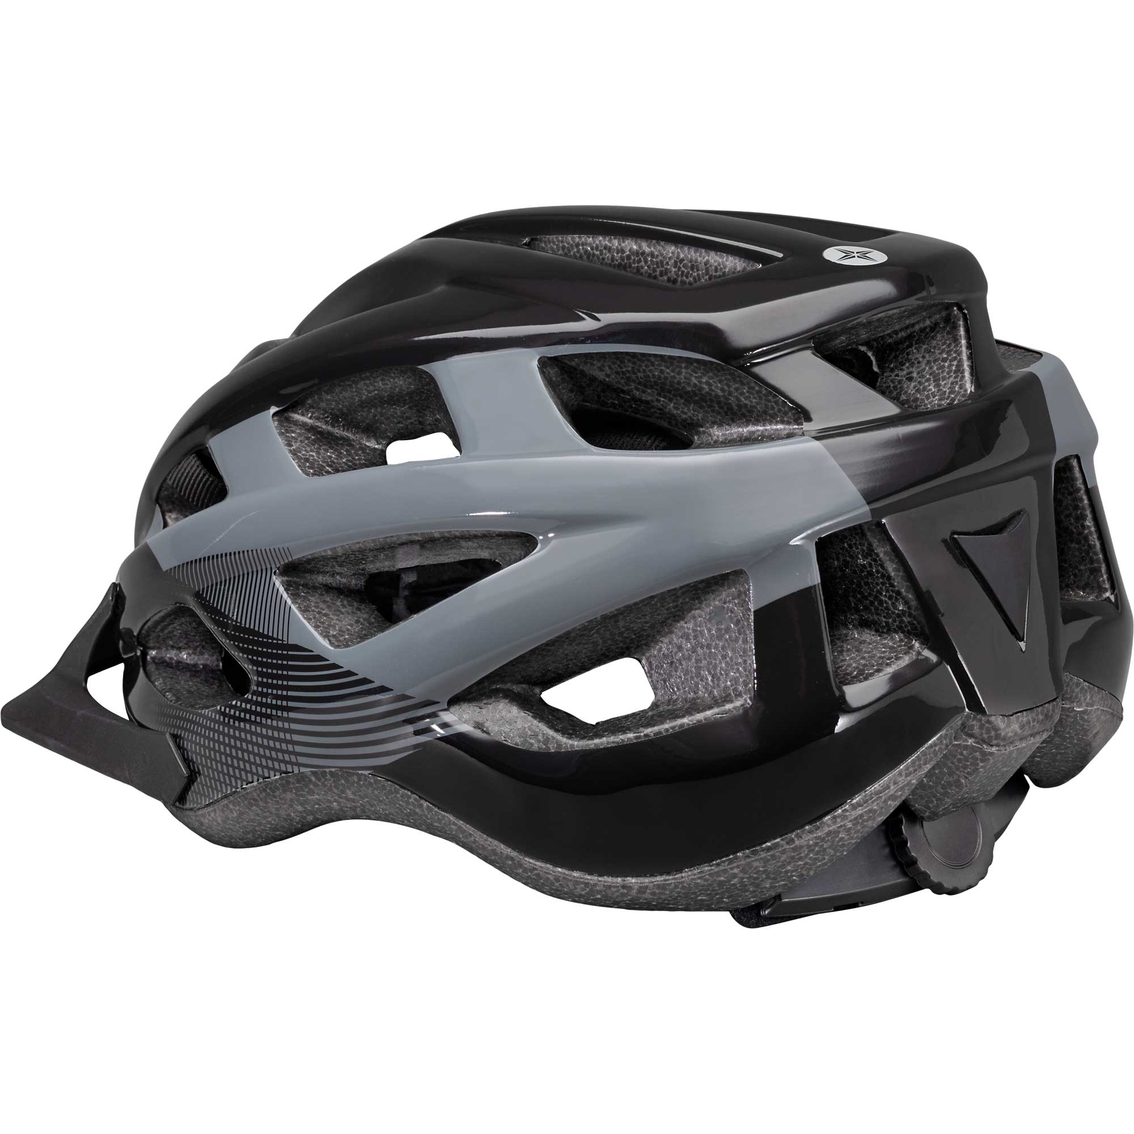 Schwinn Breeze Adult Bike Helmet, Black and Grey - Image 2 of 2